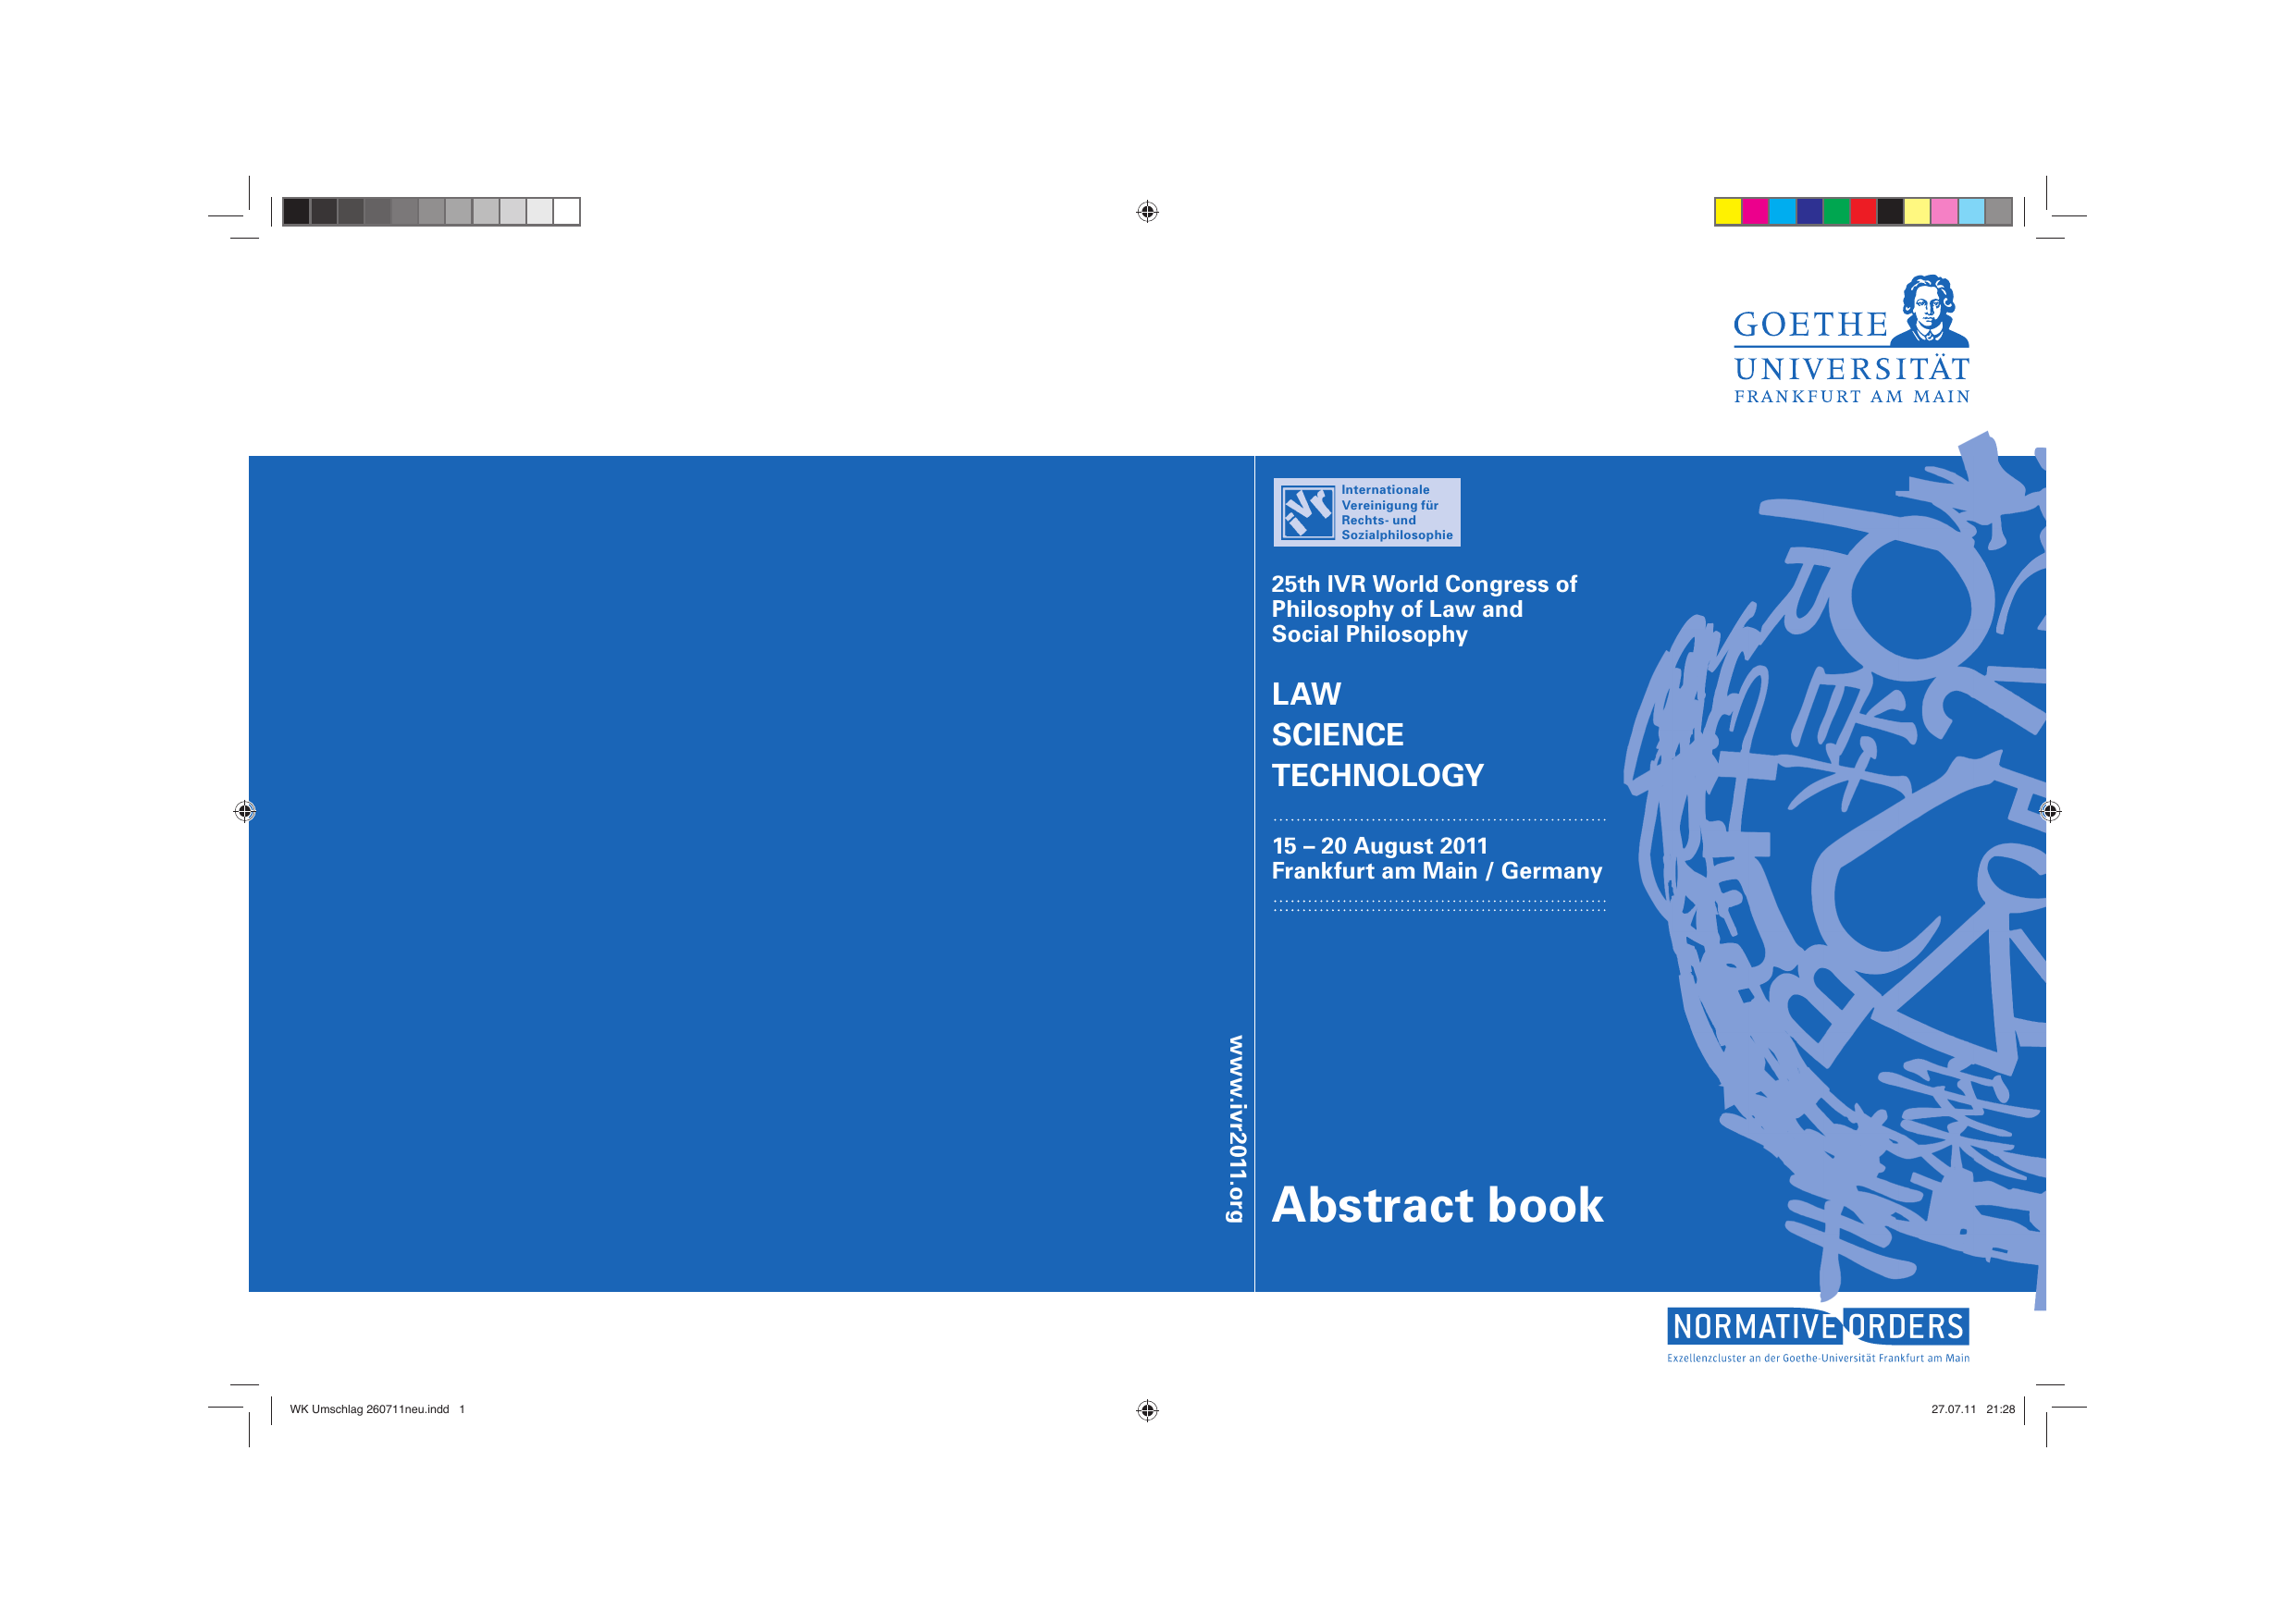 Abstract book - Publication Server of Goethe University Frankfurt am